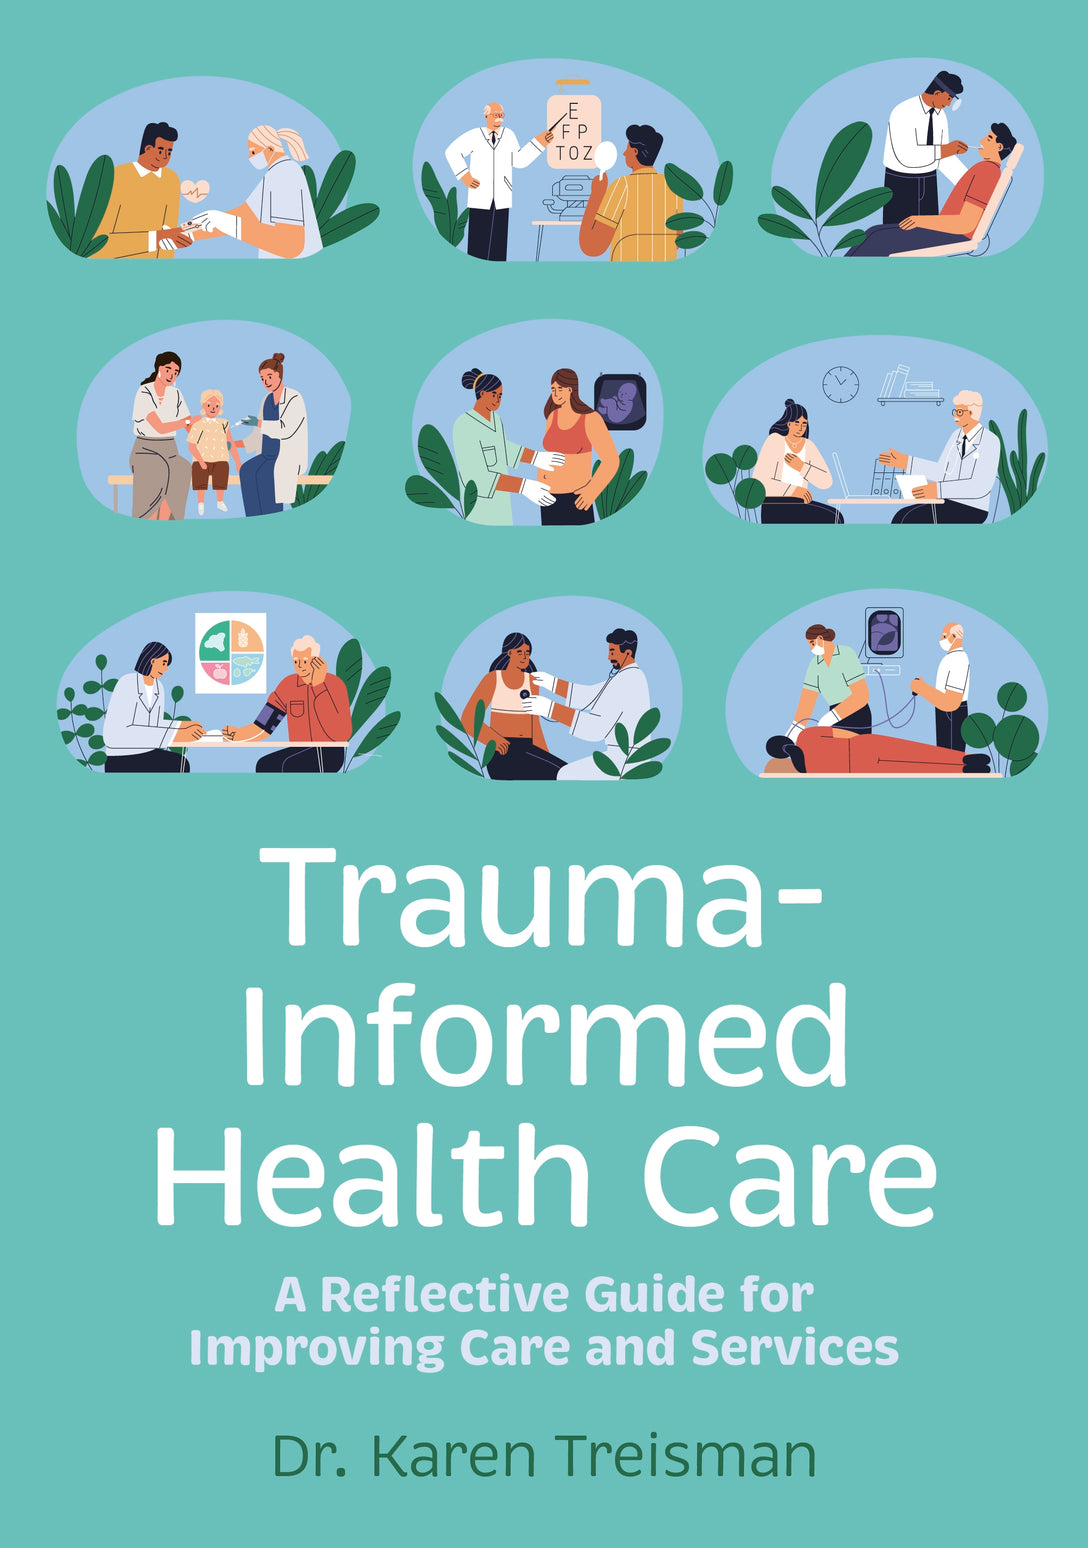 Trauma-Informed Health Care by Karen Treisman